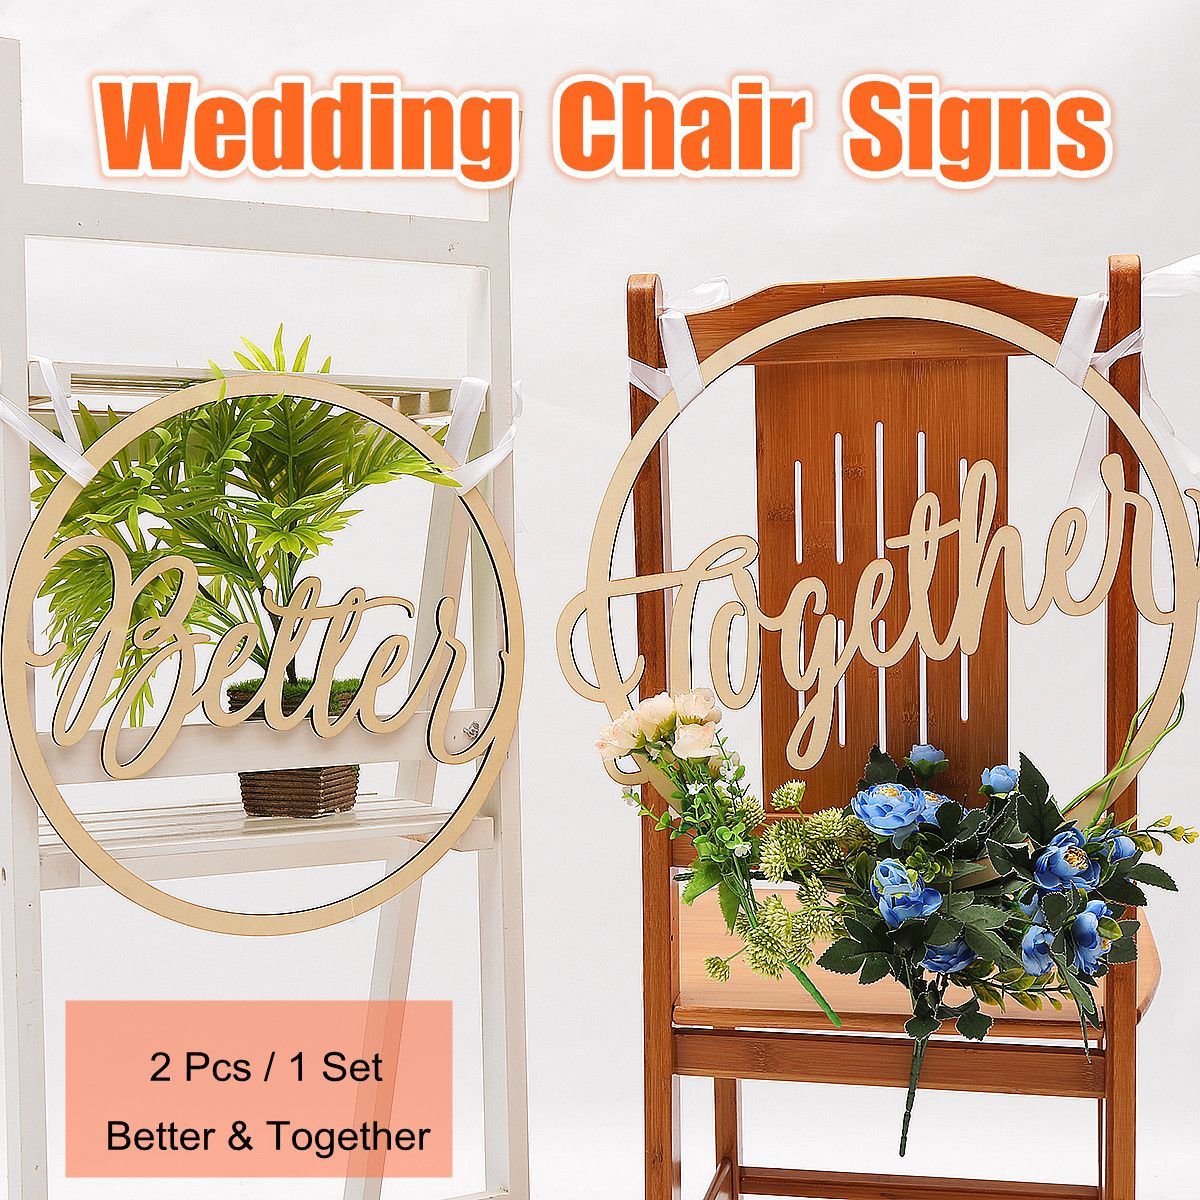 2Pcs-Wedding-Chair-Signs-Decorative-Wooden-Pendants-Groom-Bride-Party-Decorations-1485851